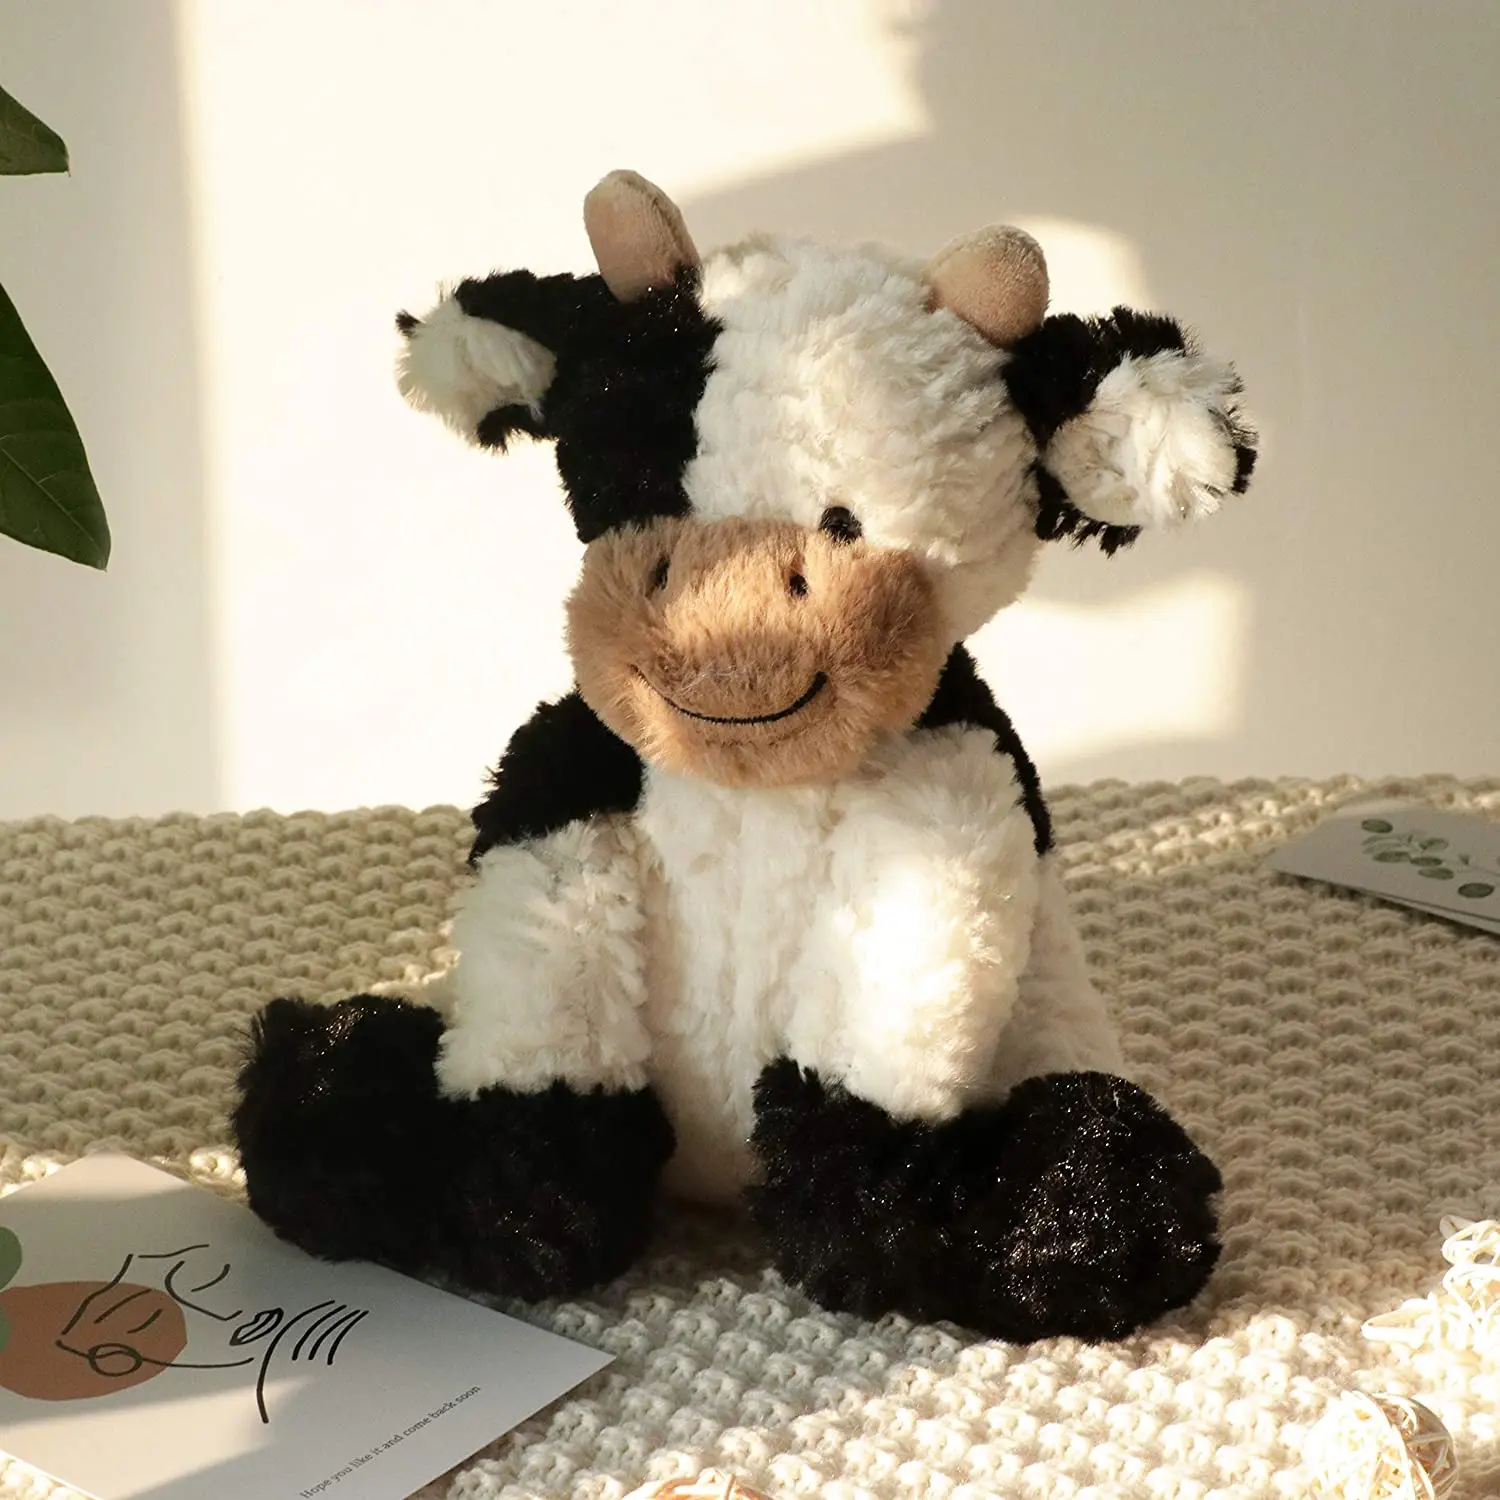 Stuffed Animals Kawaii Cute Plush Toys For Kids Soft And Comfortable